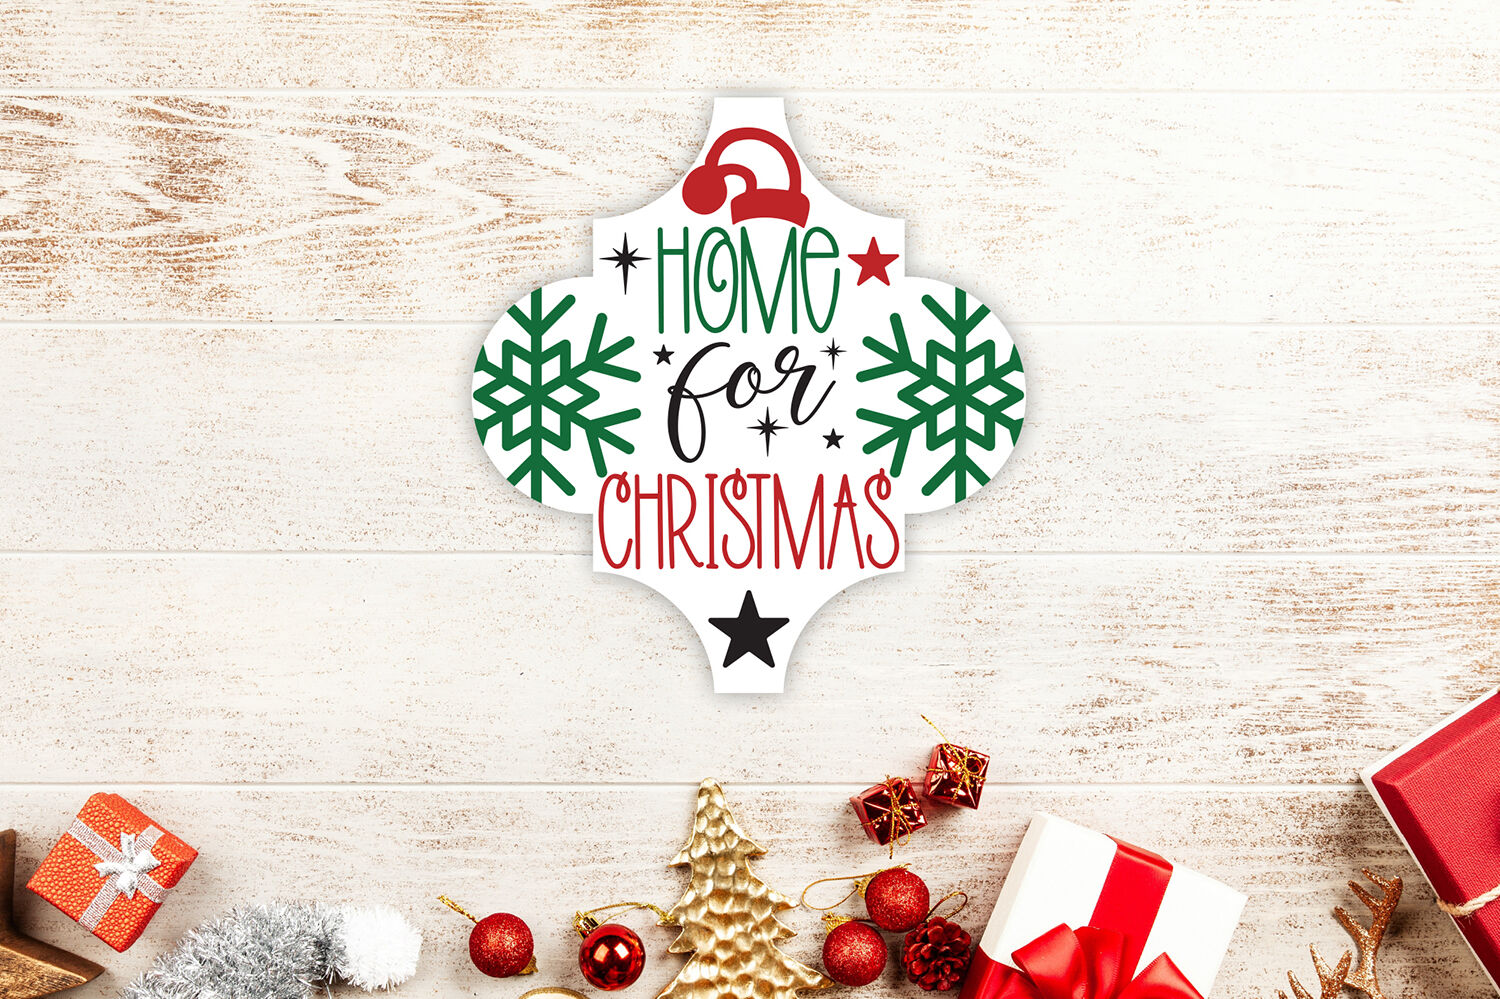 Download Arabesque Tile Ornament SVG, Joyful, Christmas SVG, DXF ...